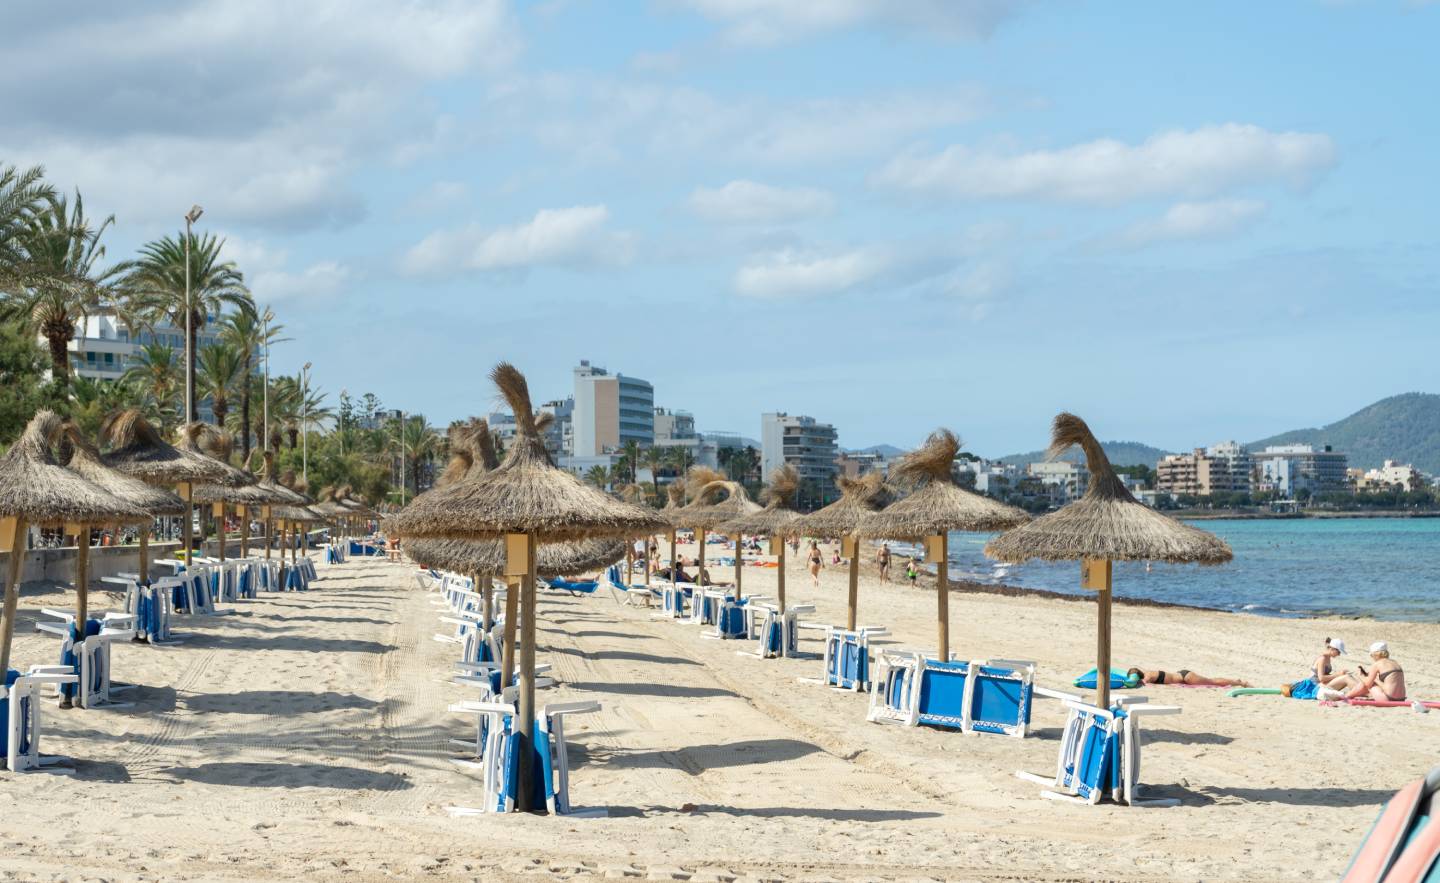 Playa de Son Moll, en Capdepera, Mallorca, el 17 de julio de 2020.
Shutterstock / Jaz_Online